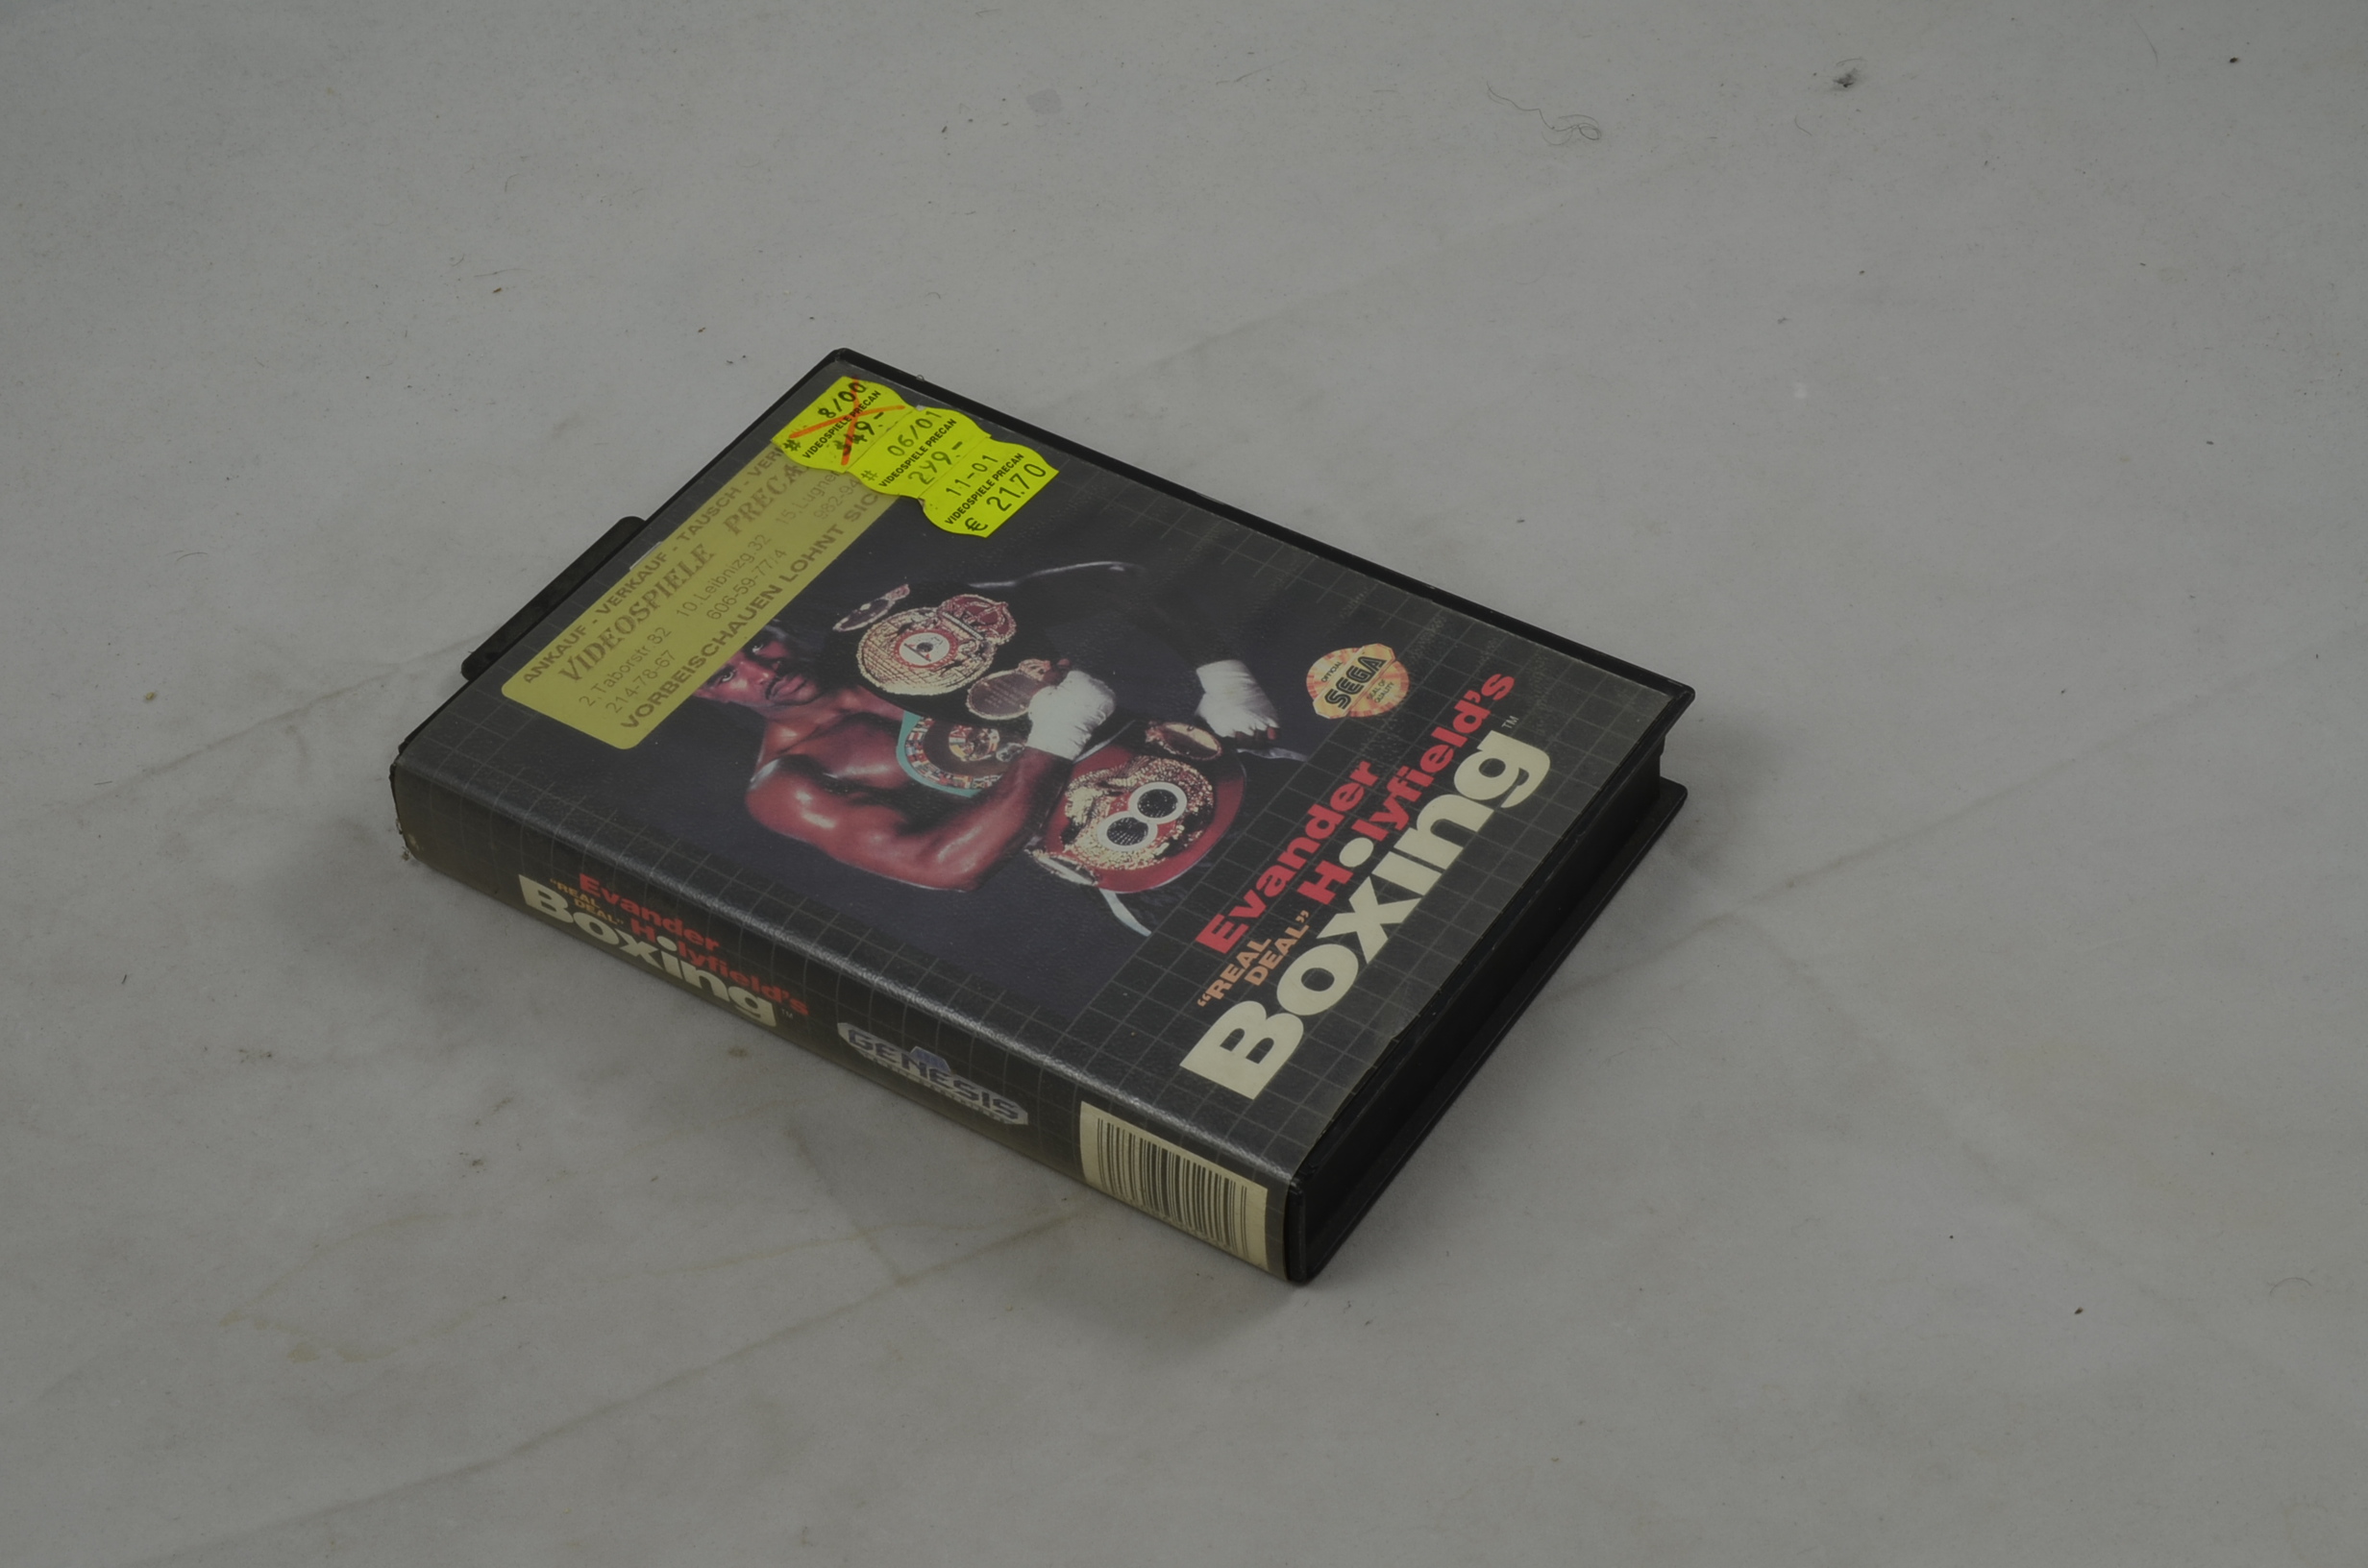 Produktbild von Evander Holyfield's Real Deal Boxing Sega Mega Drive Spiel CIB (gut)